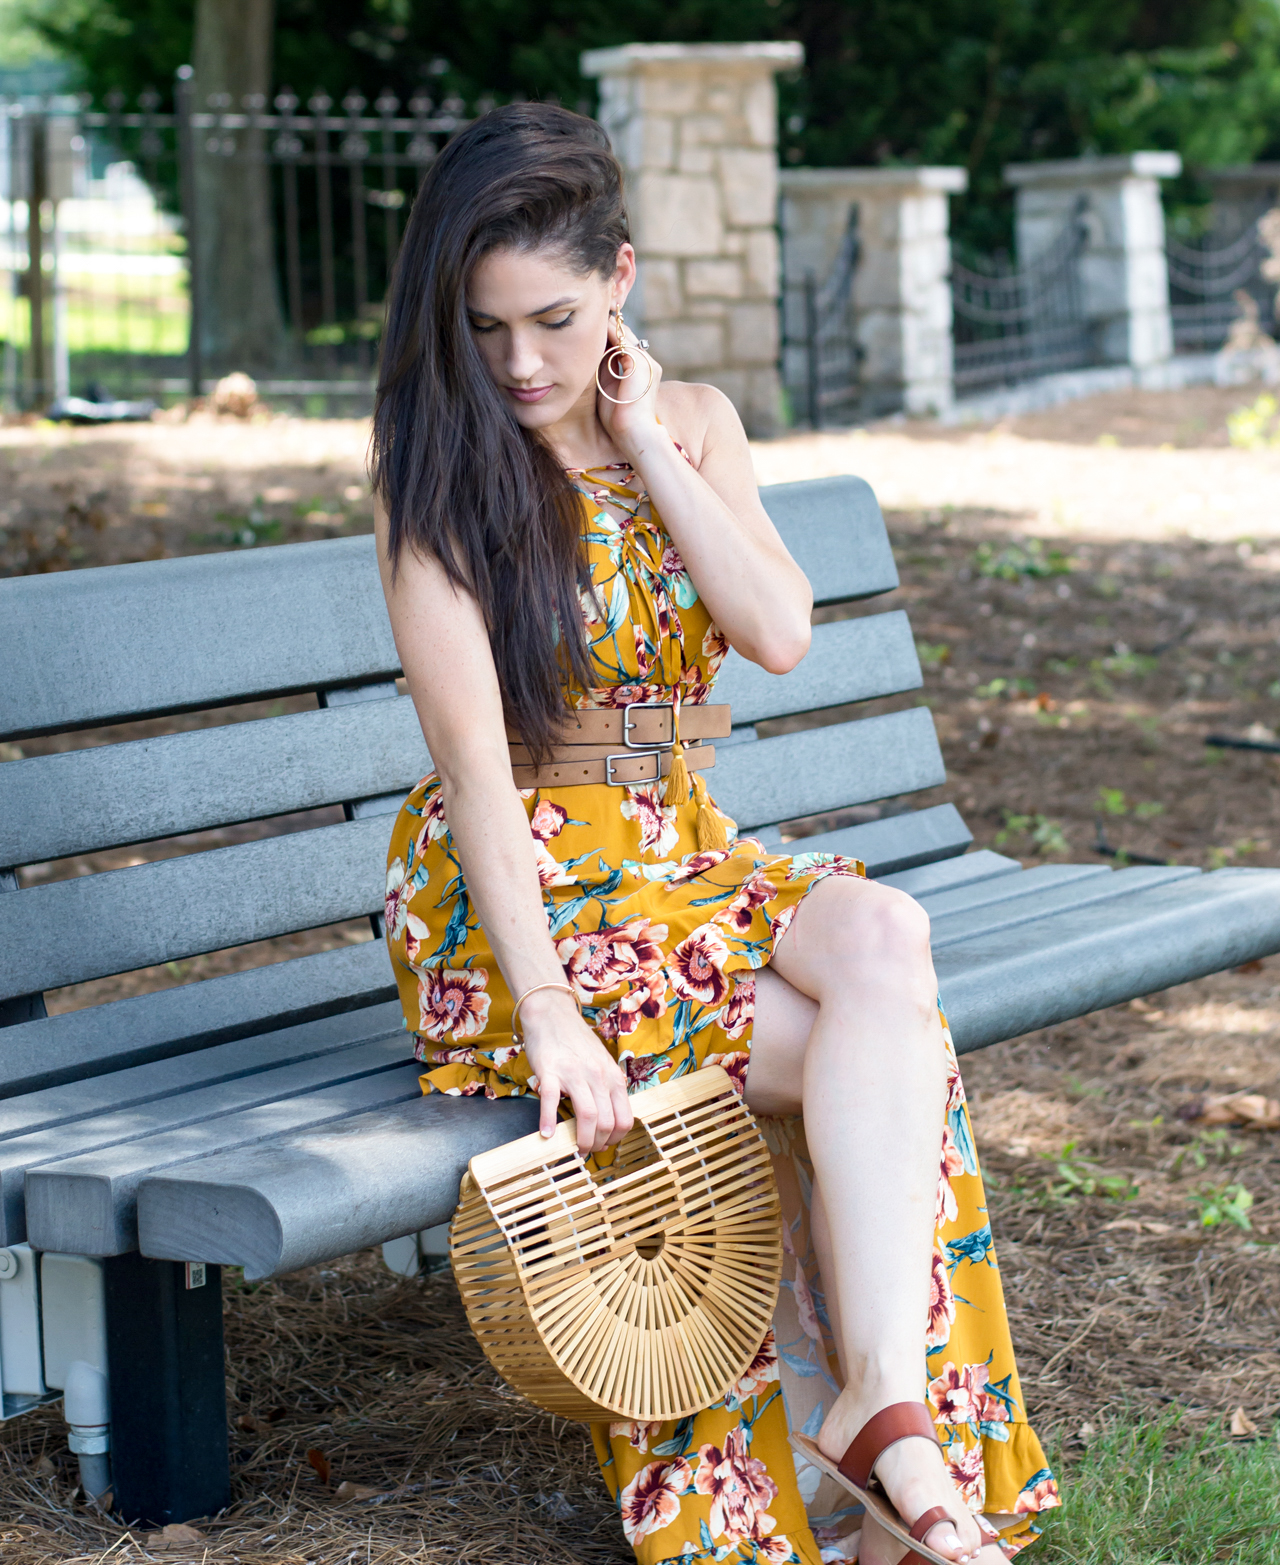 Petite-Friendly Maxi Dress - By Atlanta Style Blogger Erica Valentin